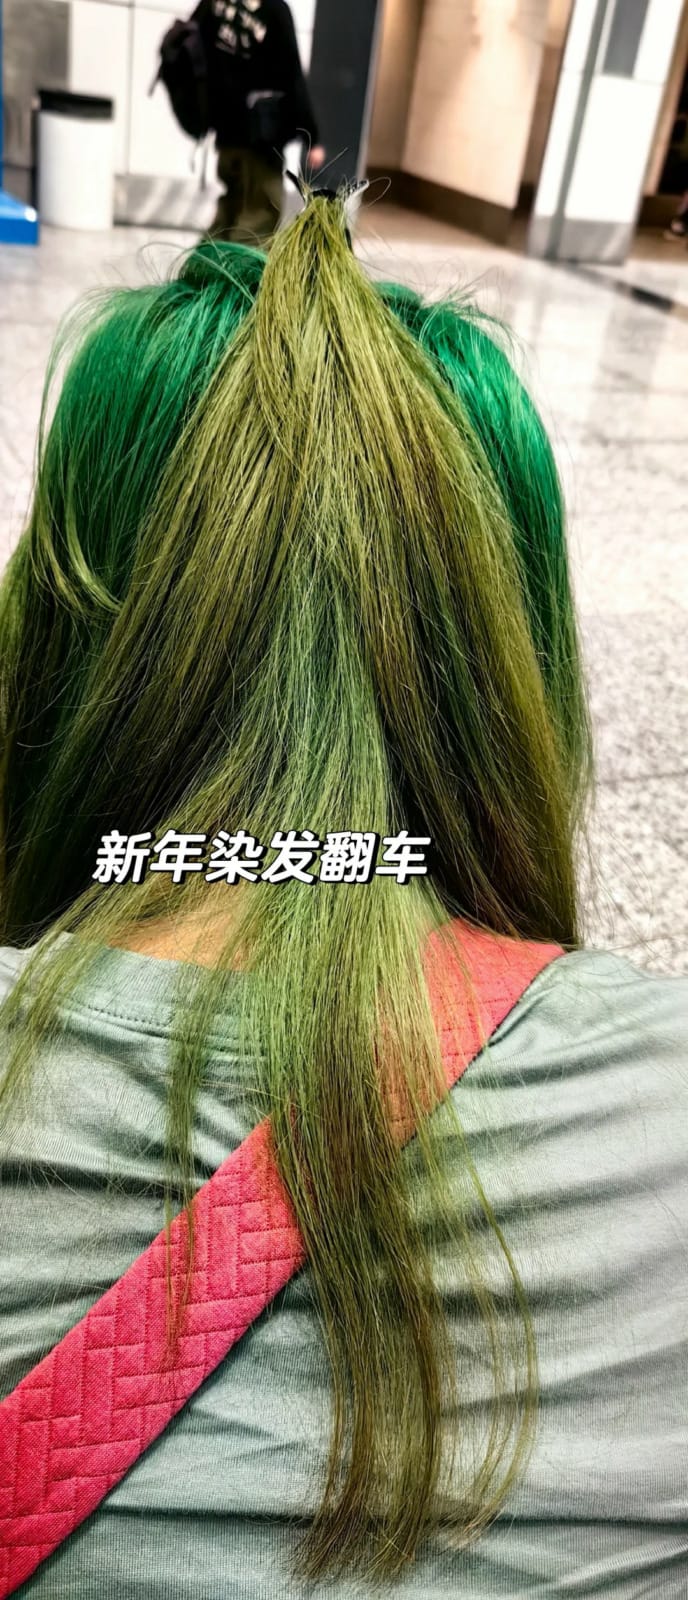 hair dye cny 1 1